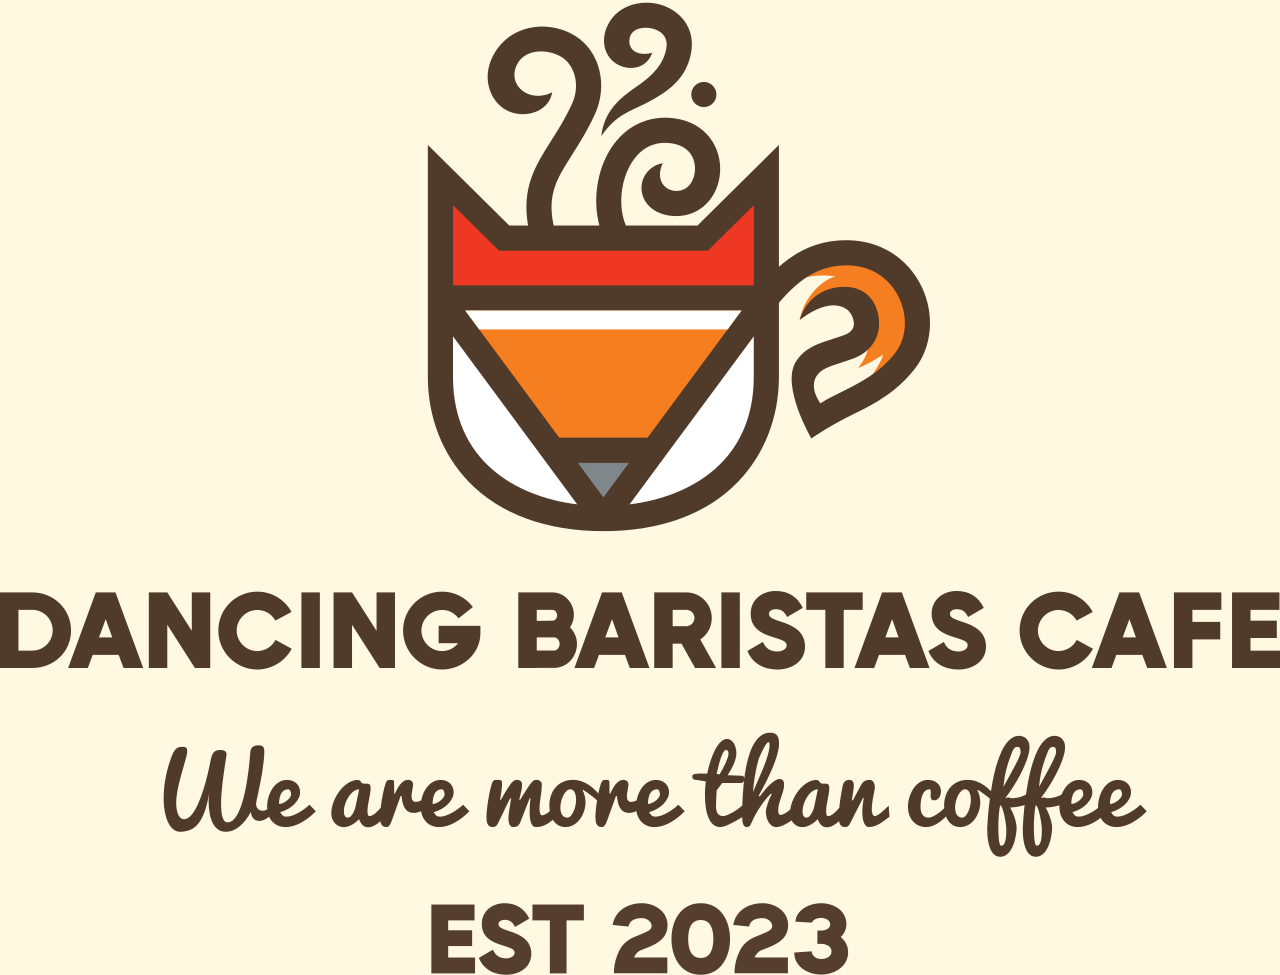 Dancing Baristas Cafe